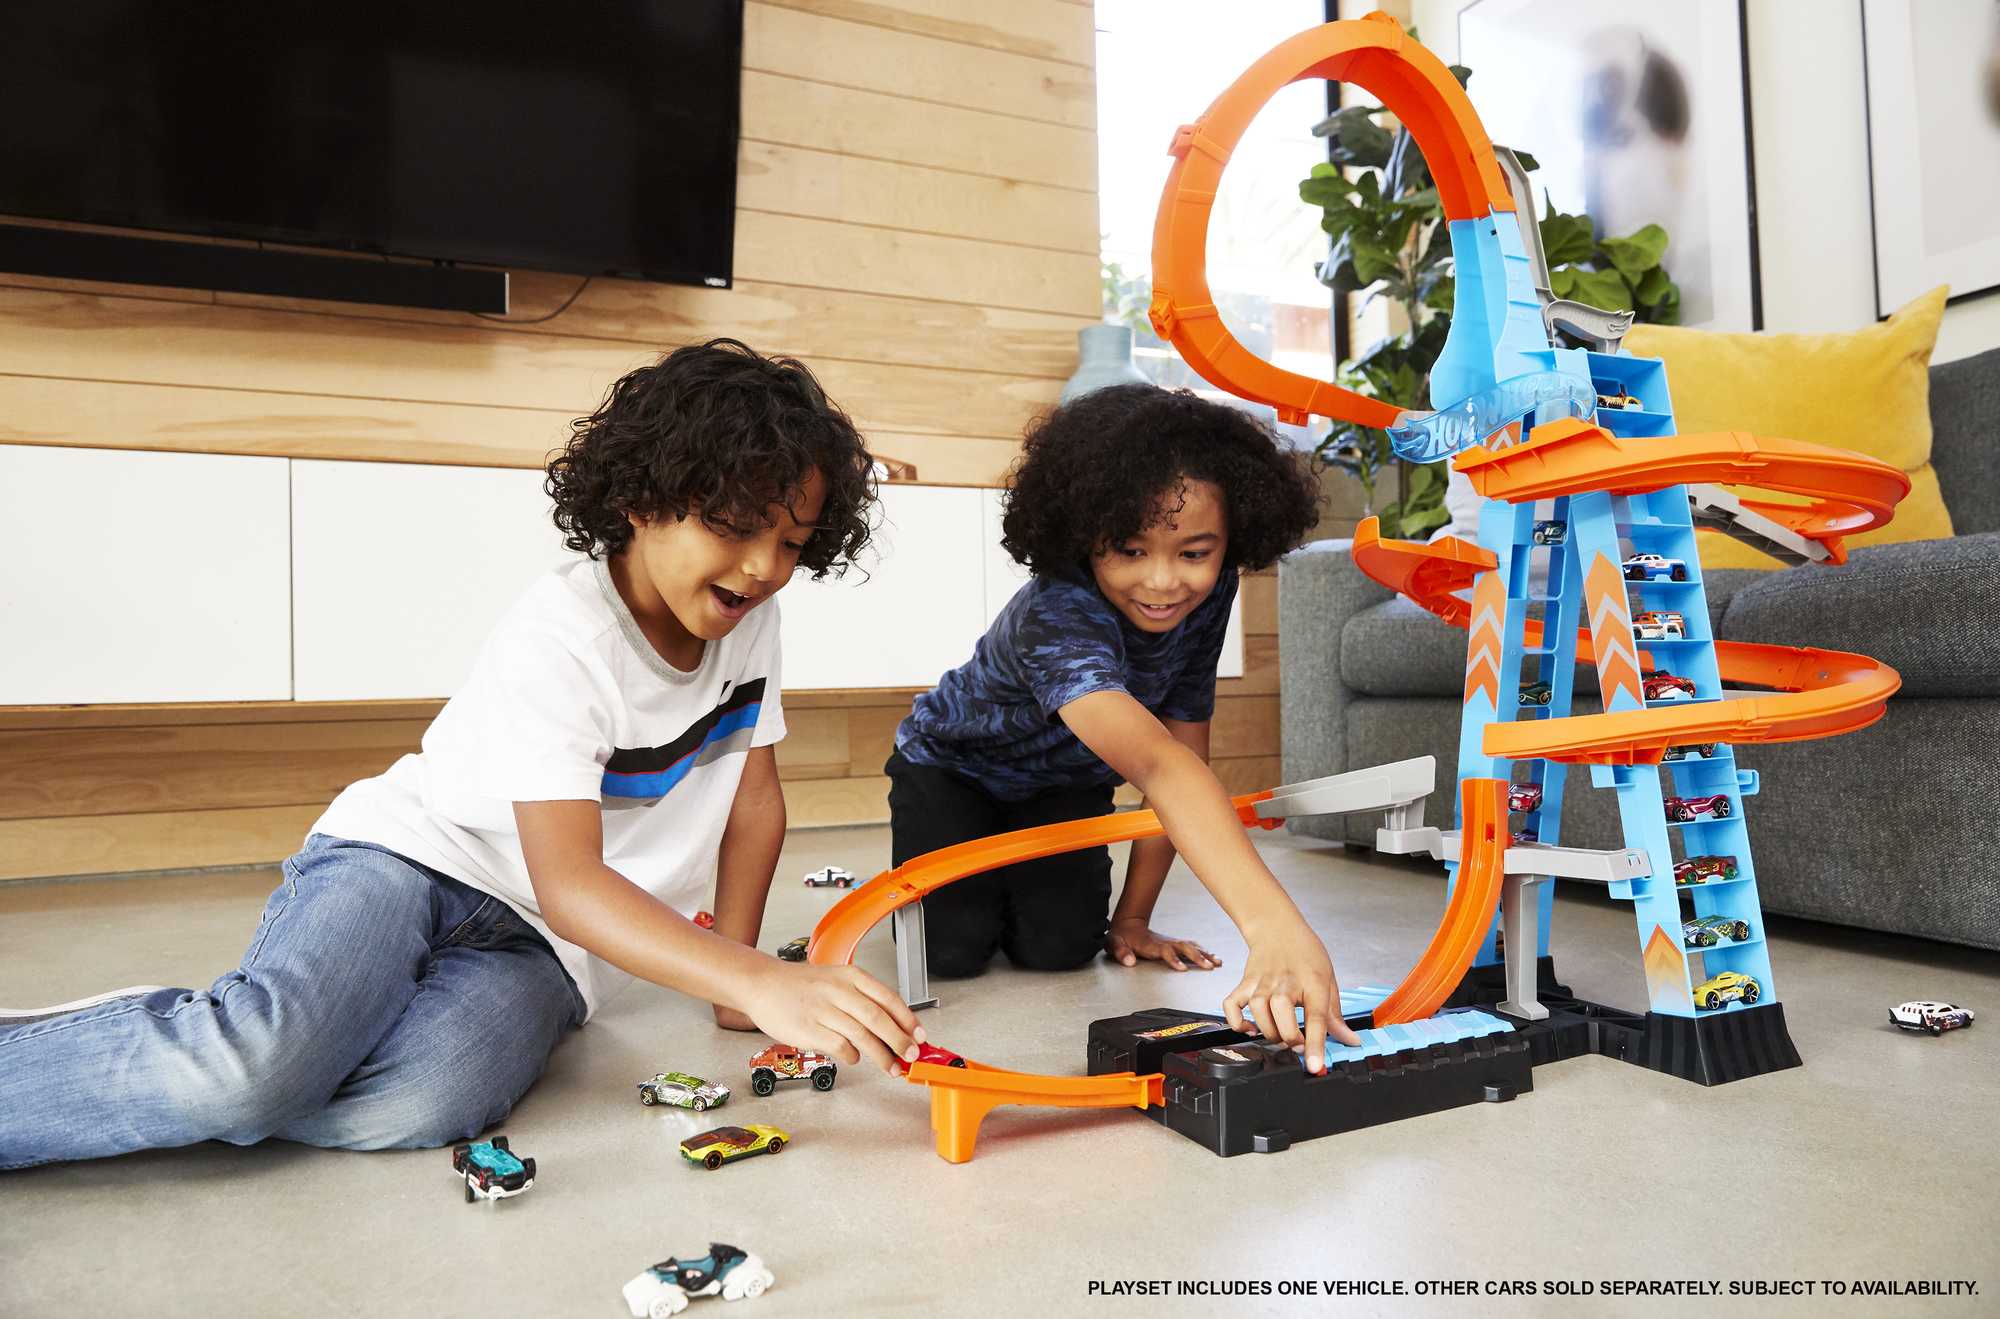 Hot Wheels Corkscrew Crash Track Set 3 Loops Car Launch Playset Kids Toy  Gift